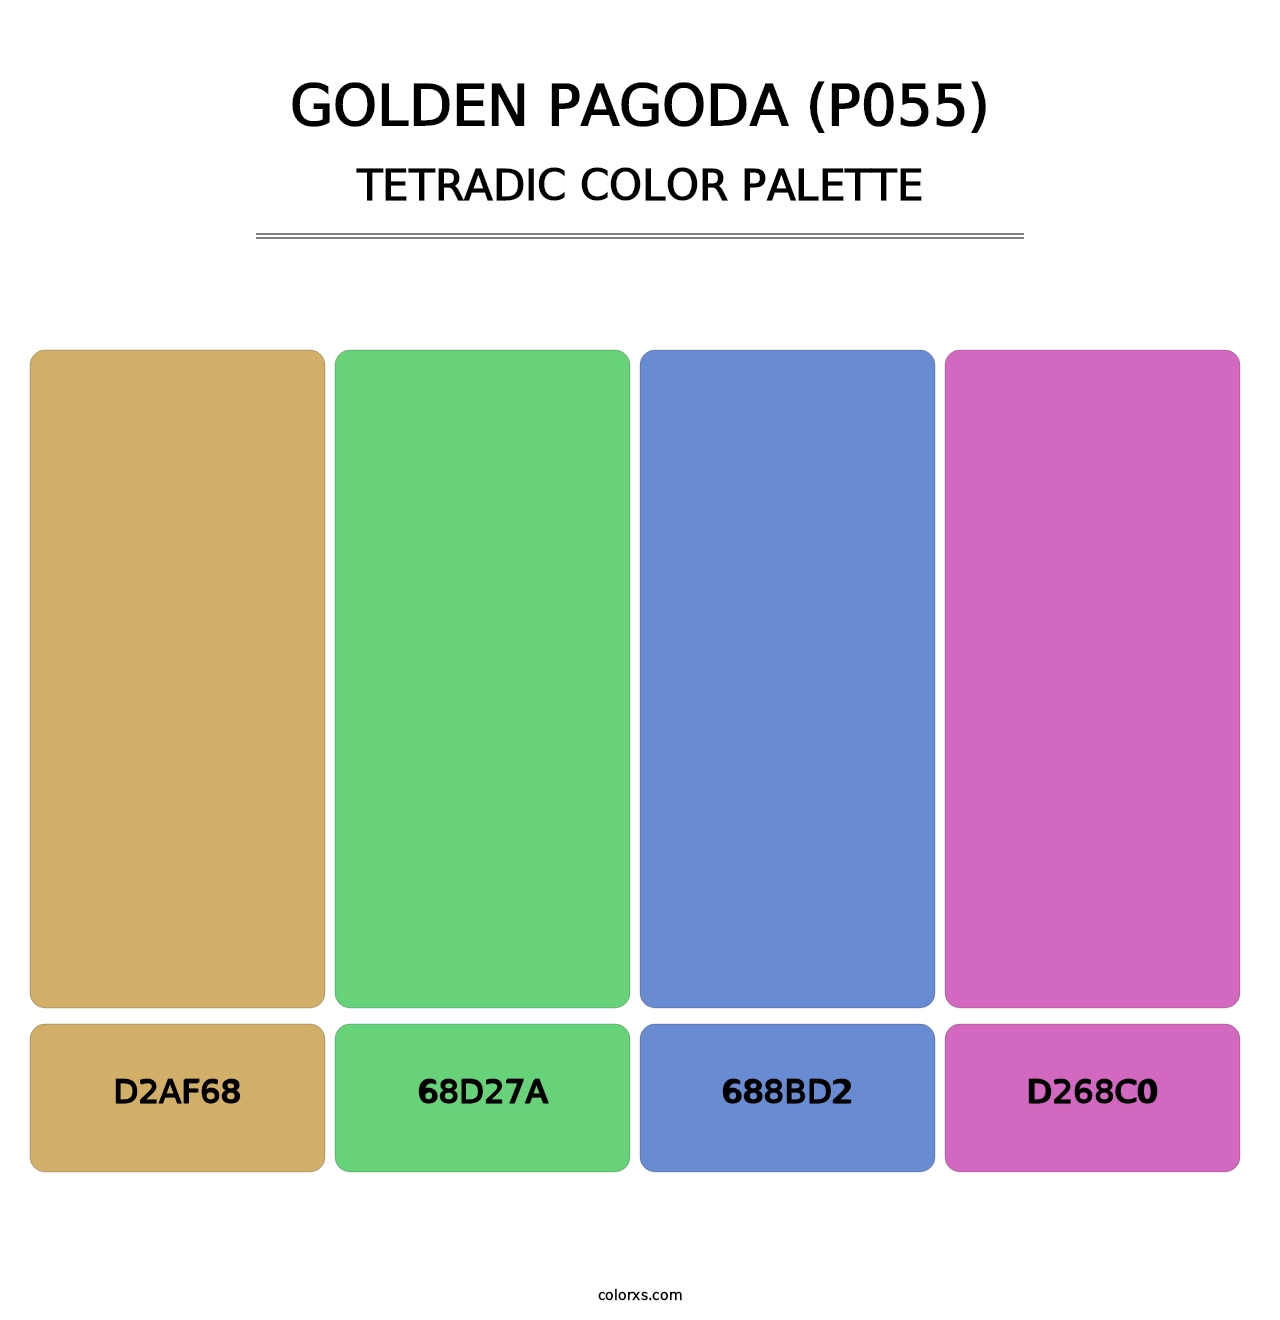 Golden Pagoda (P055) - Tetradic Color Palette